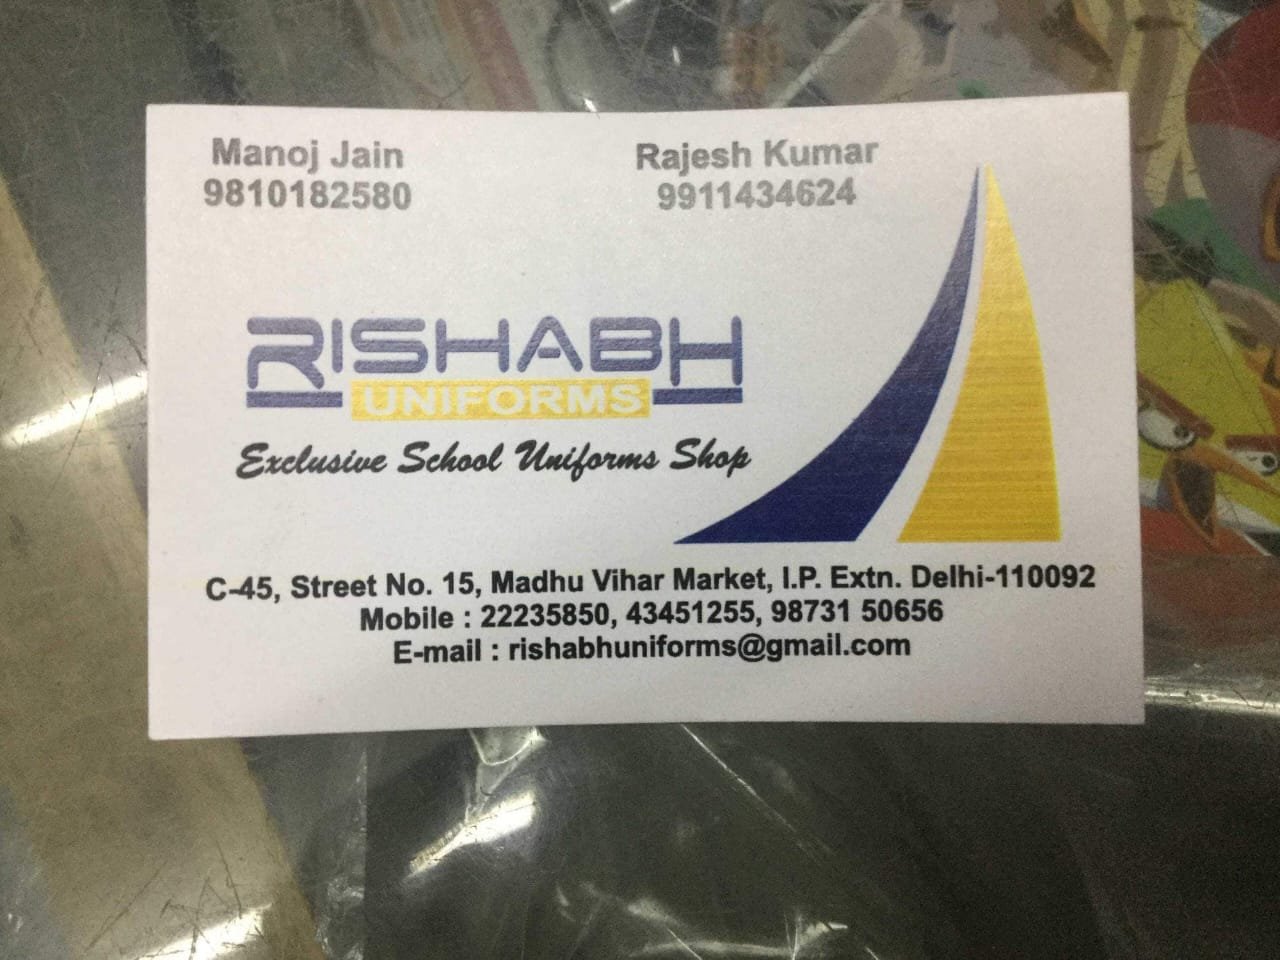 Rishabh Fashion